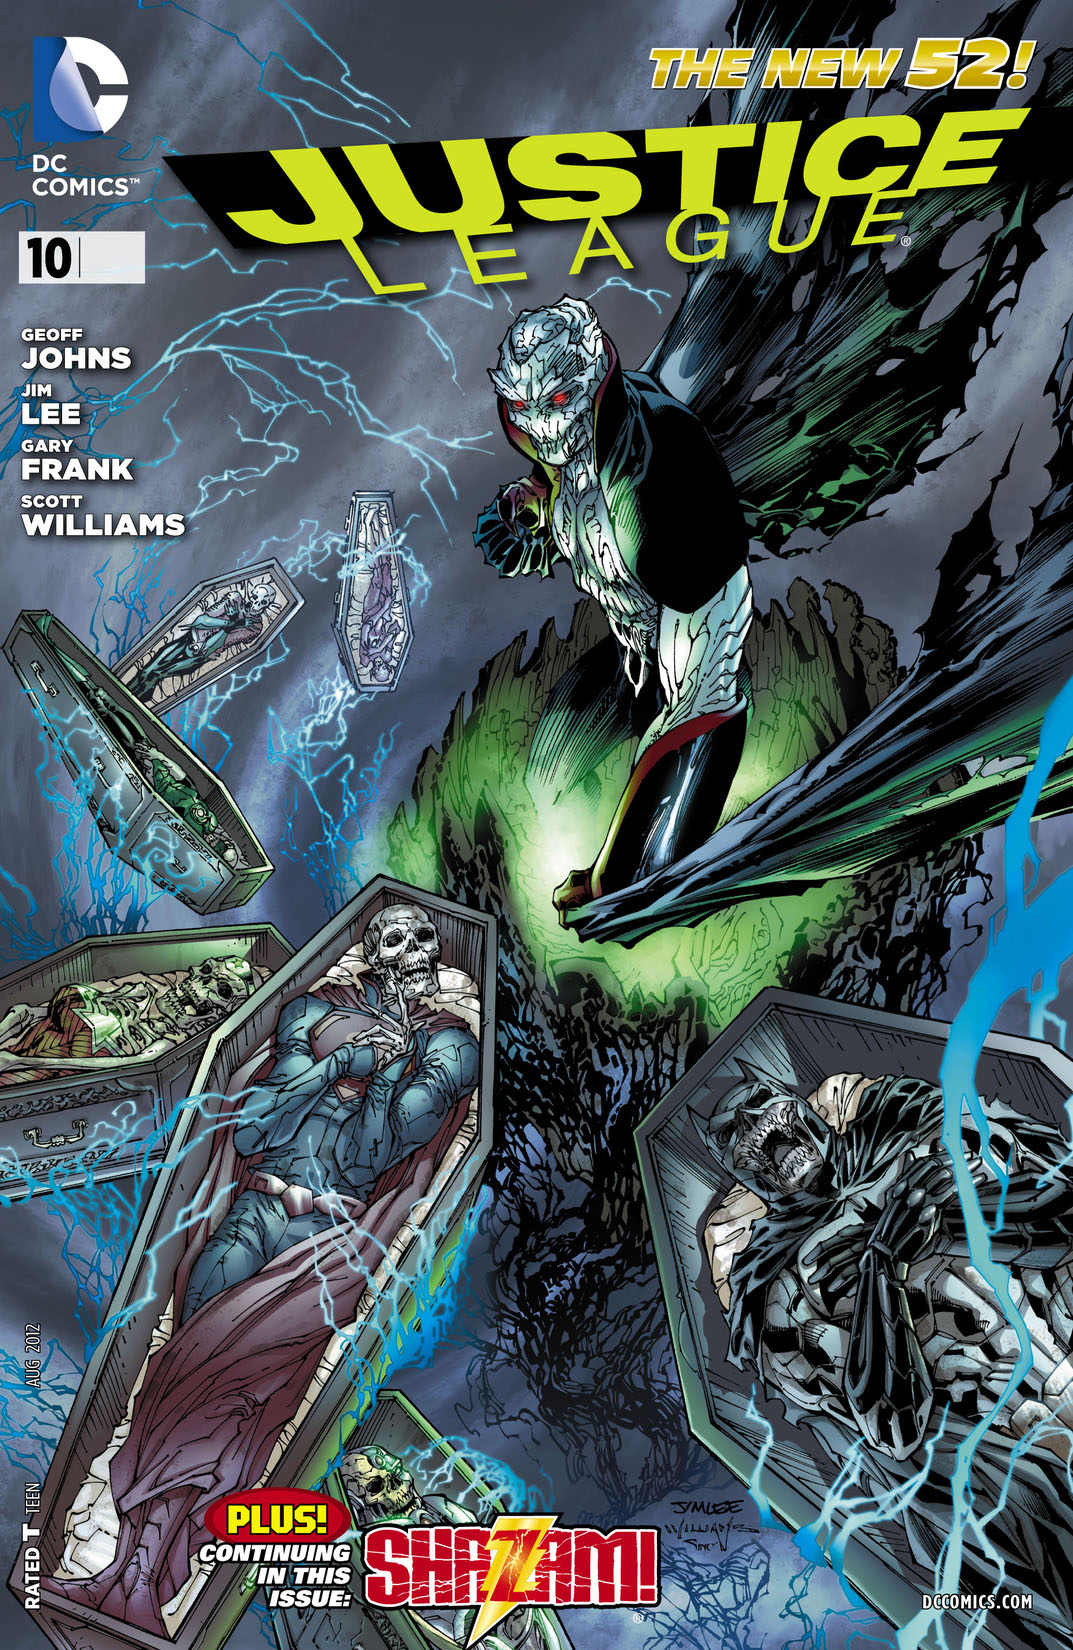 Justice League (2011-) #10 preview images